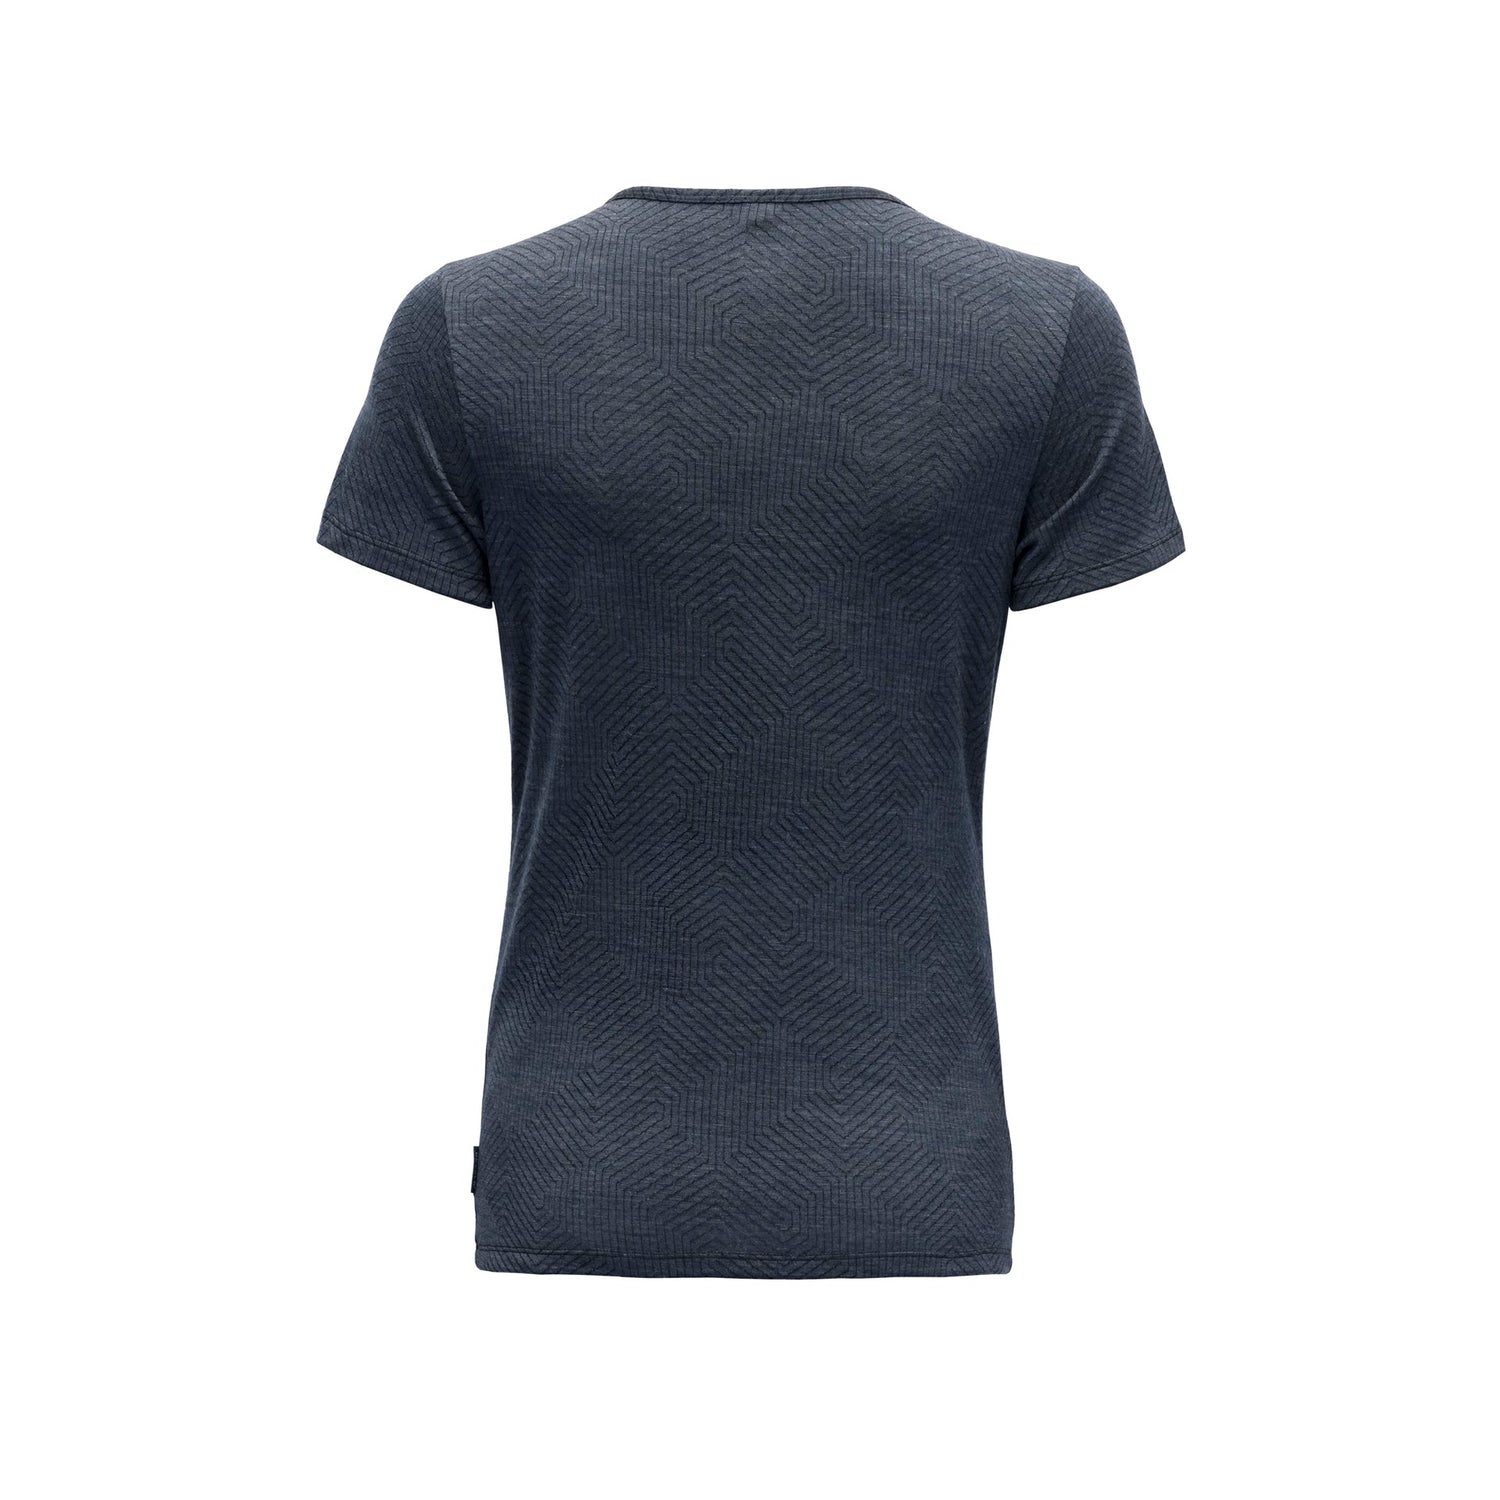 Devold W's Nipa Tee - Merino Wool & Tencel Night Shirt